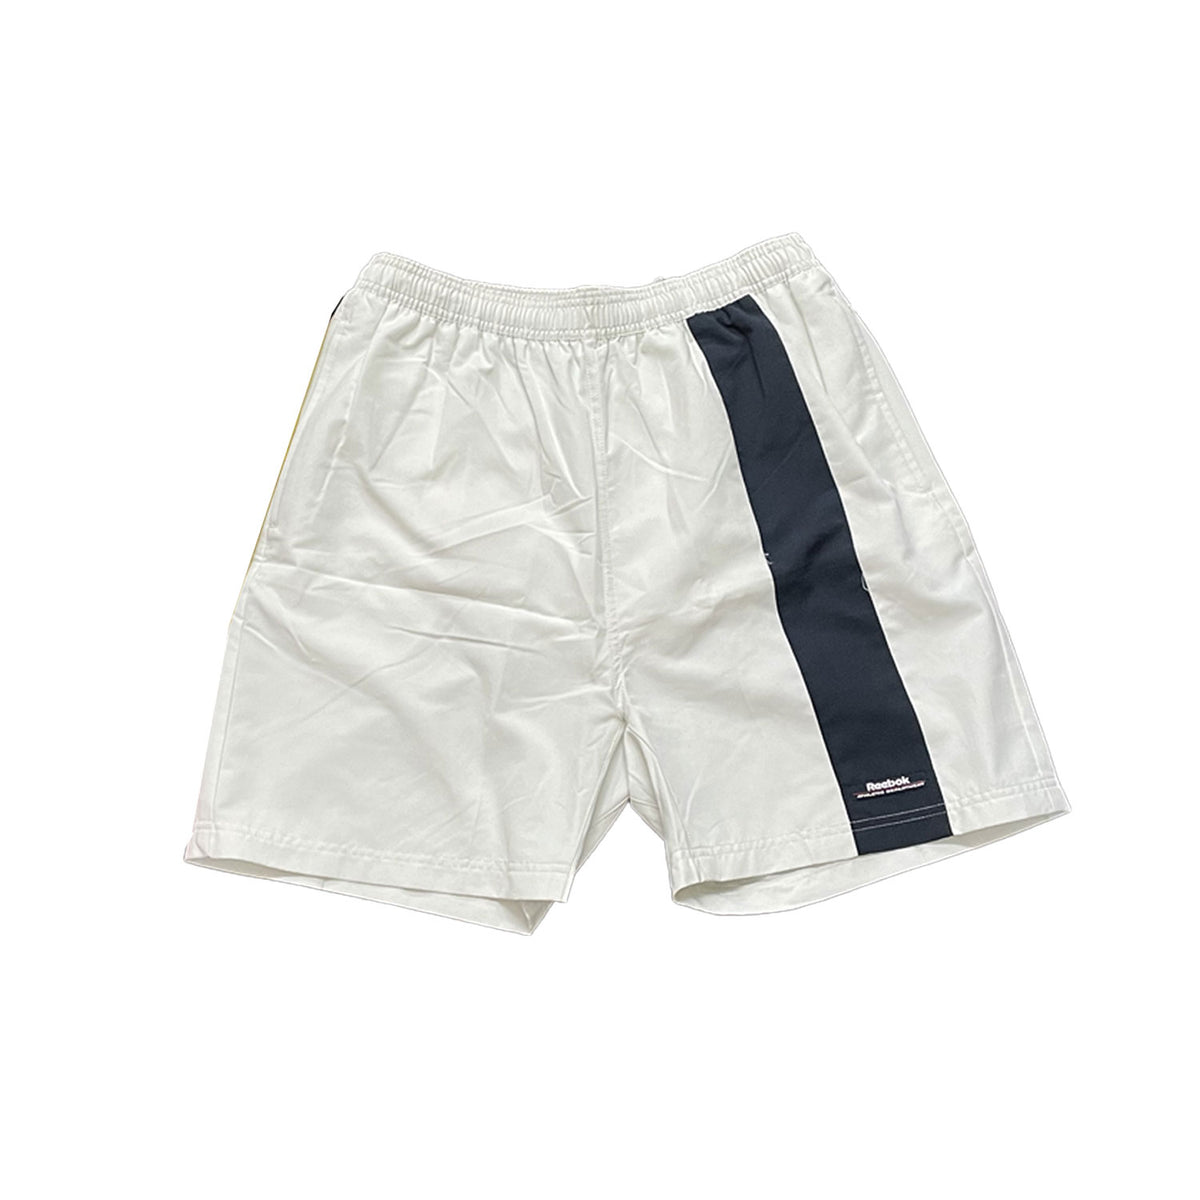 Reebok Original Mens Clearance Contrast Athletic Shorts